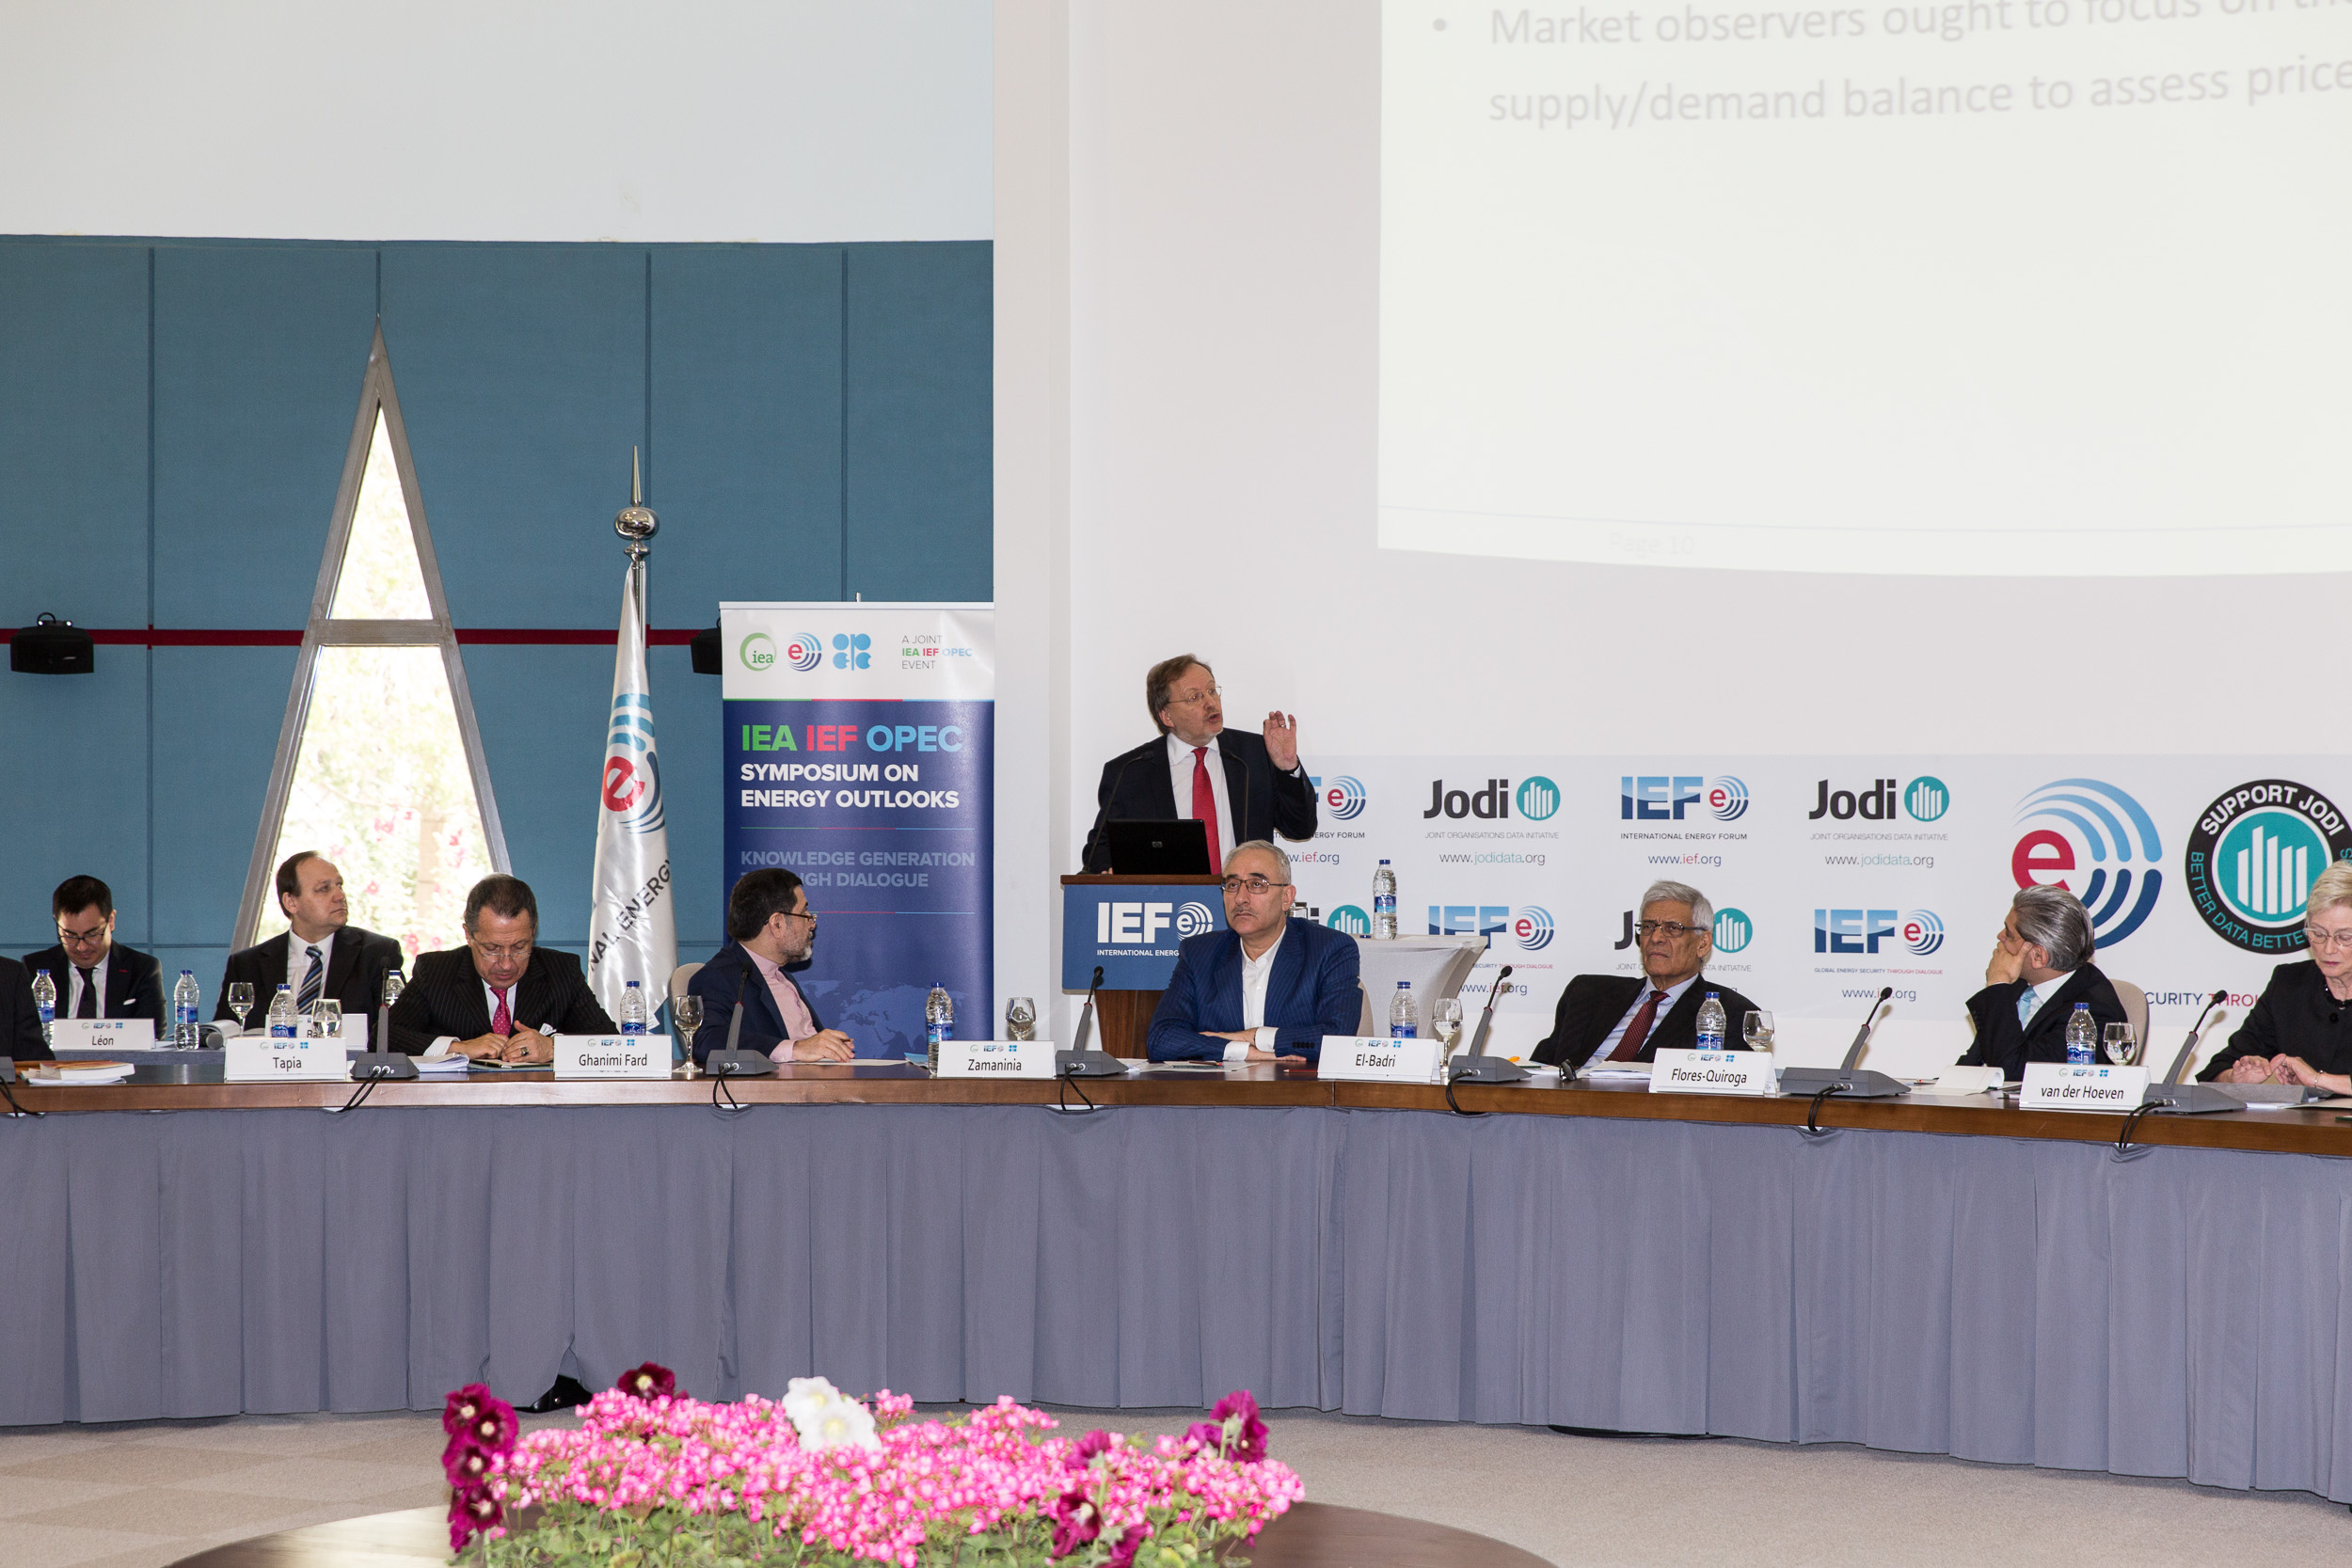 IEA IEF OPEC Symposium_21088